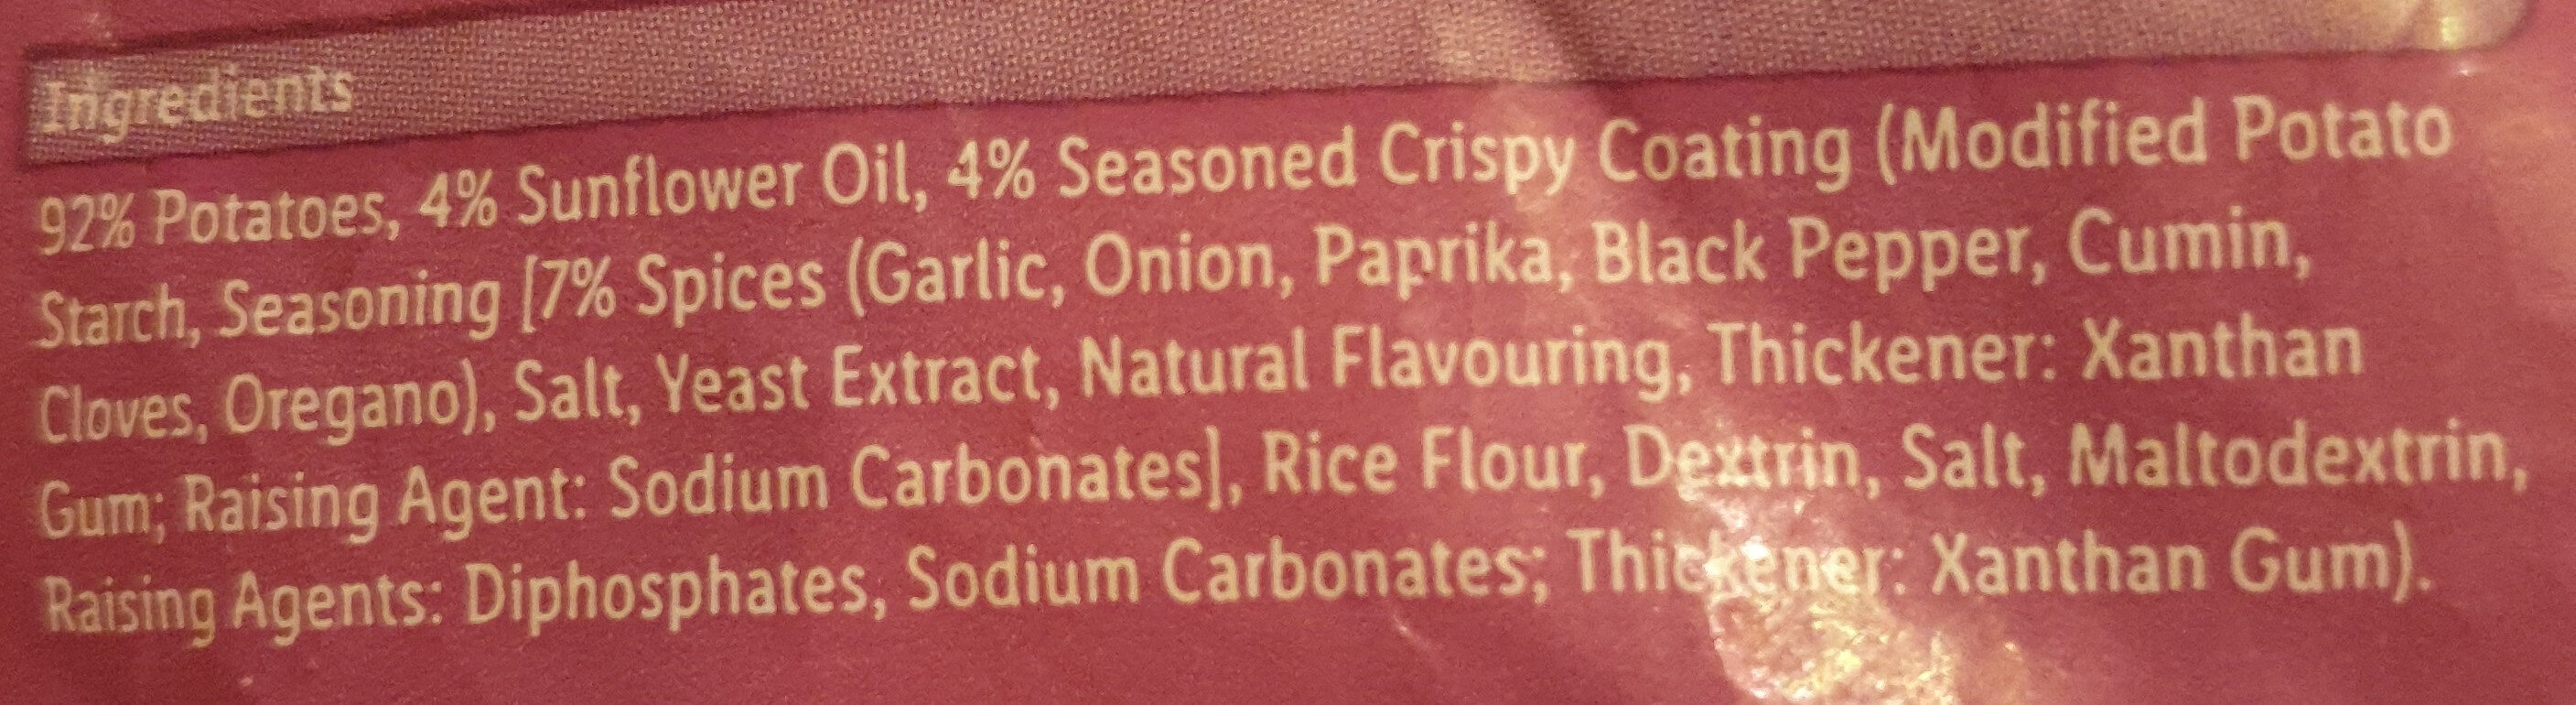 Potato Wedges - Ingredients